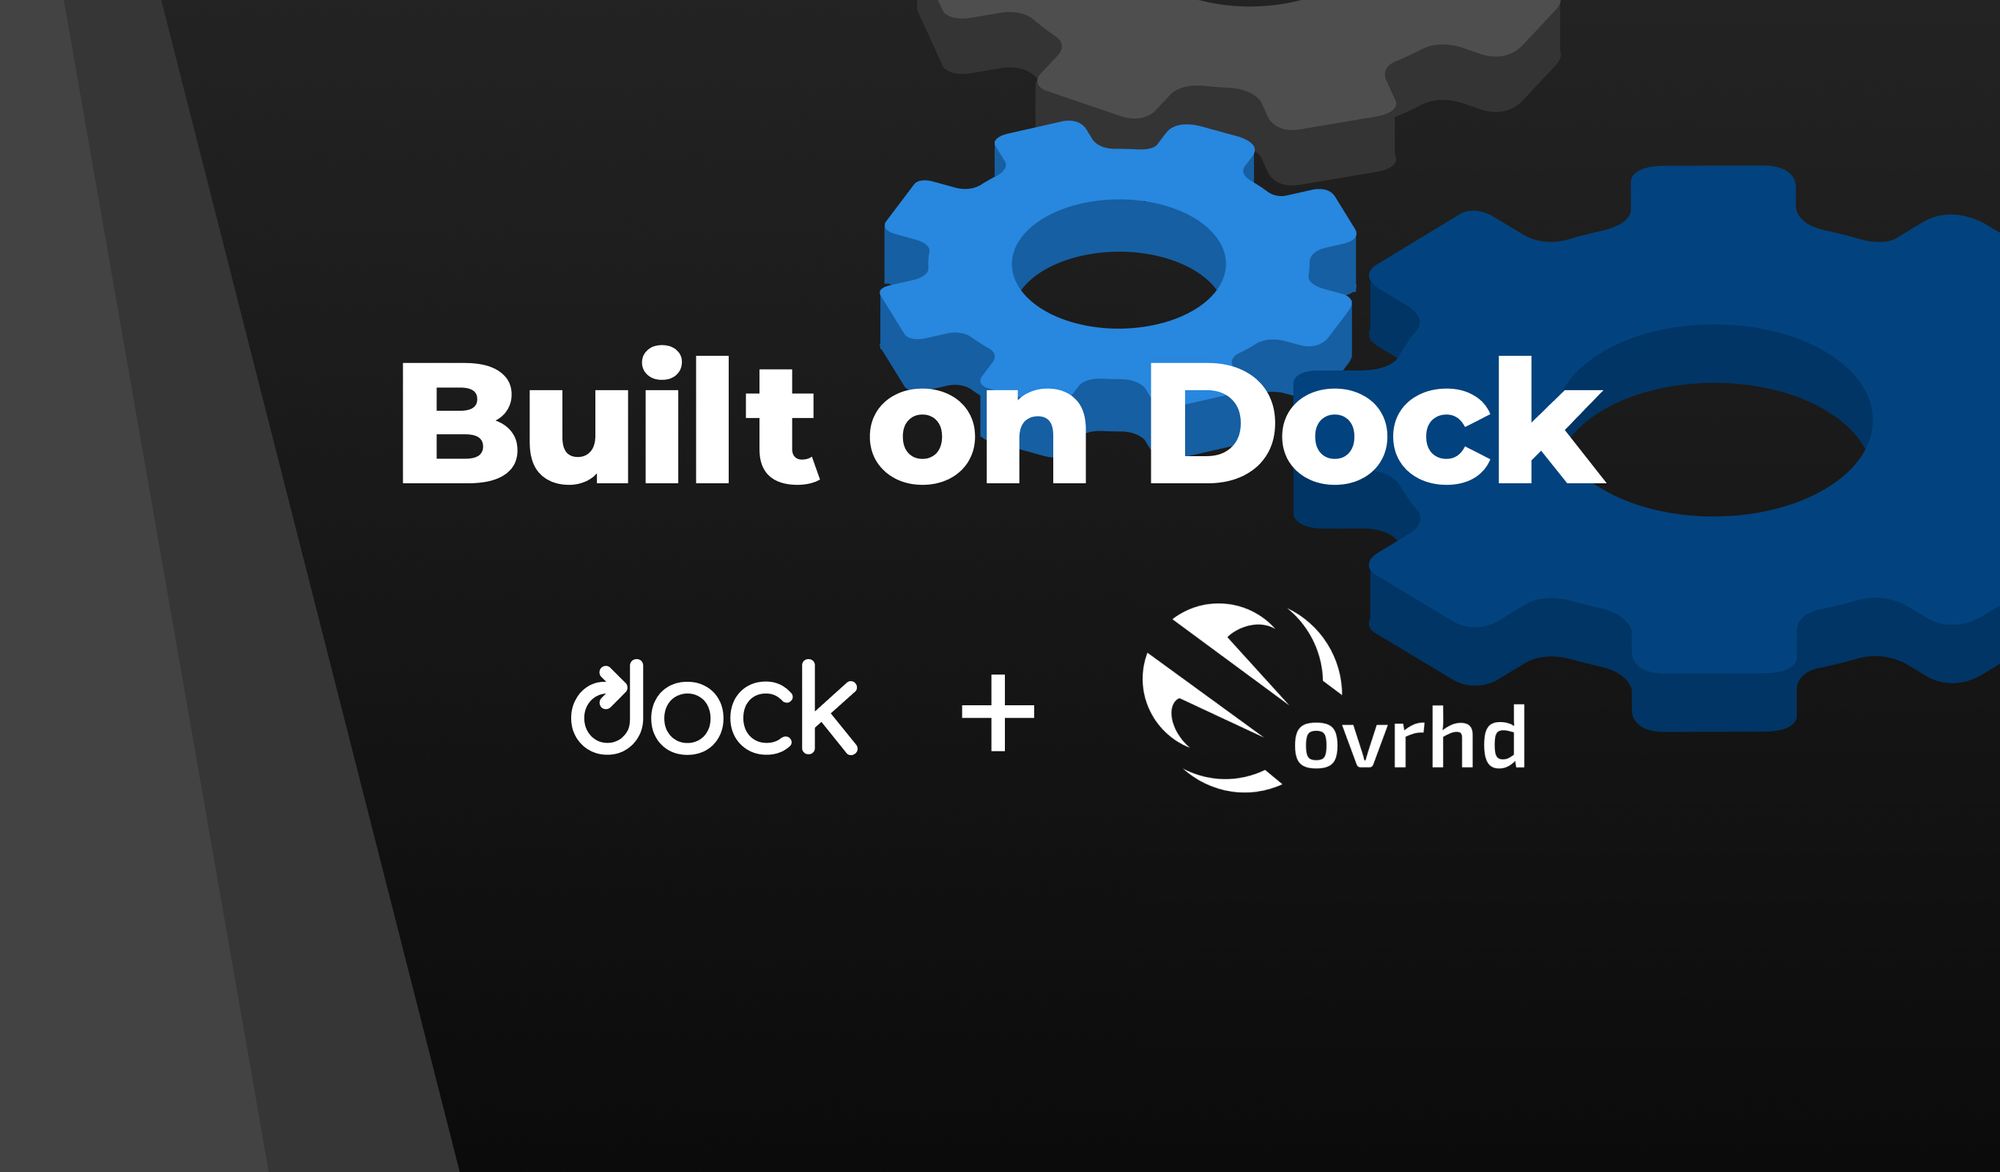 Hackathon Winners ovrhd Build Solution on Dock